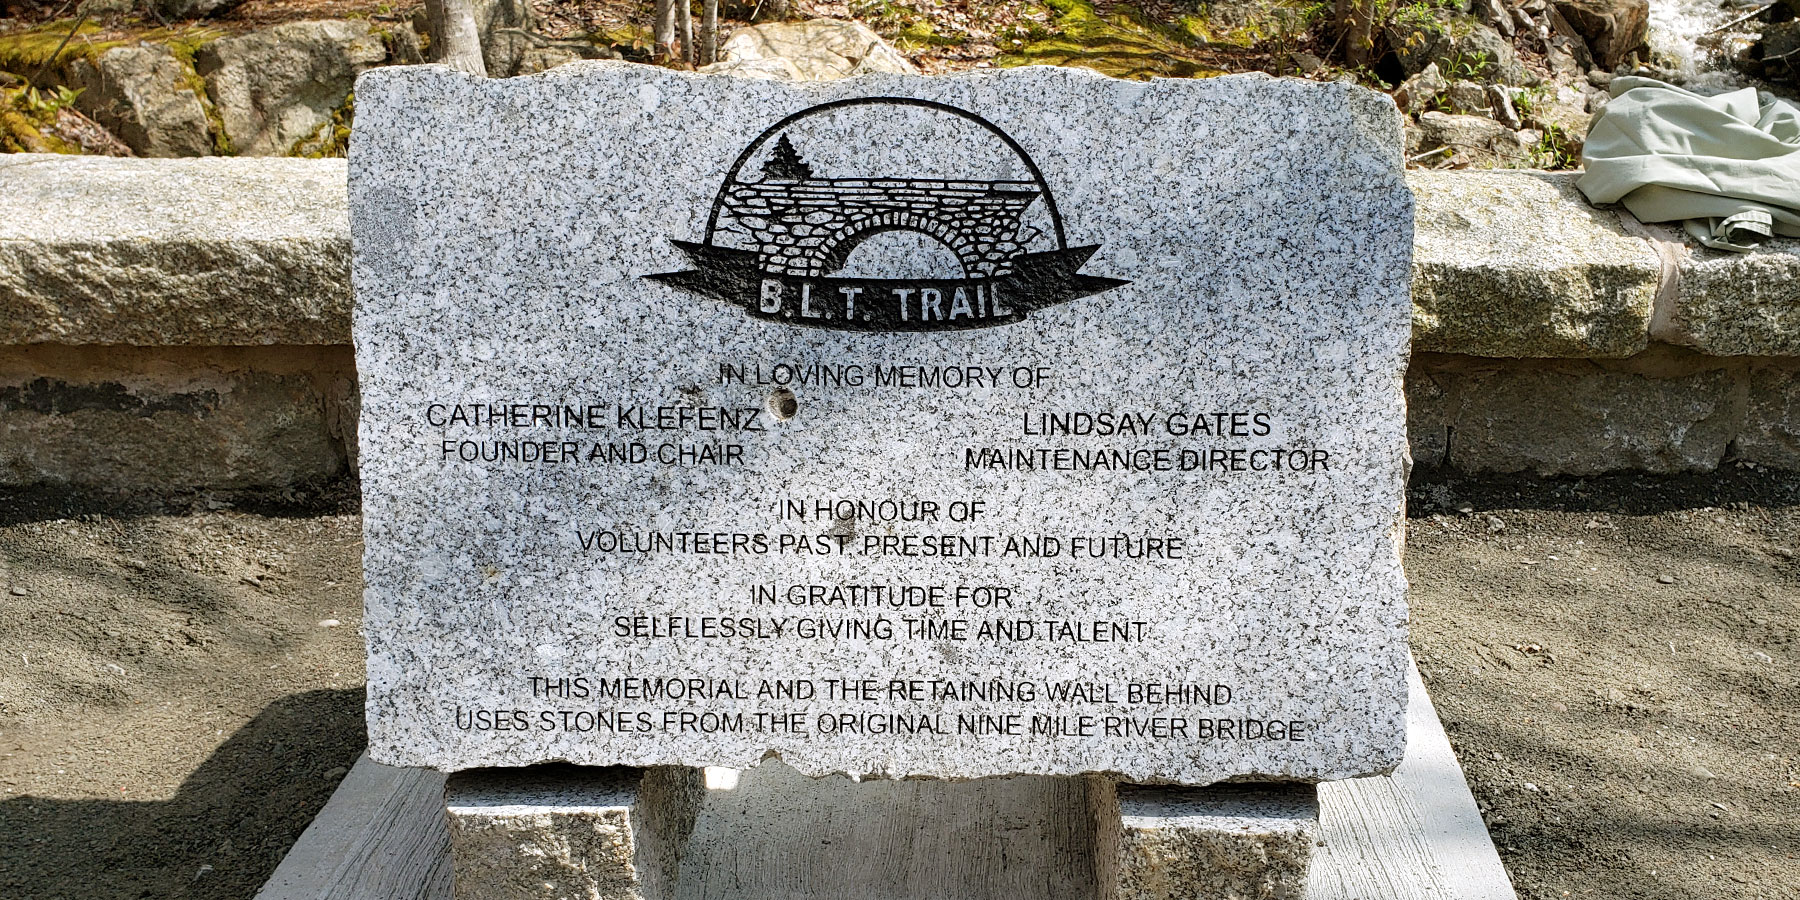 B.L.T Trail Memorial Plaque